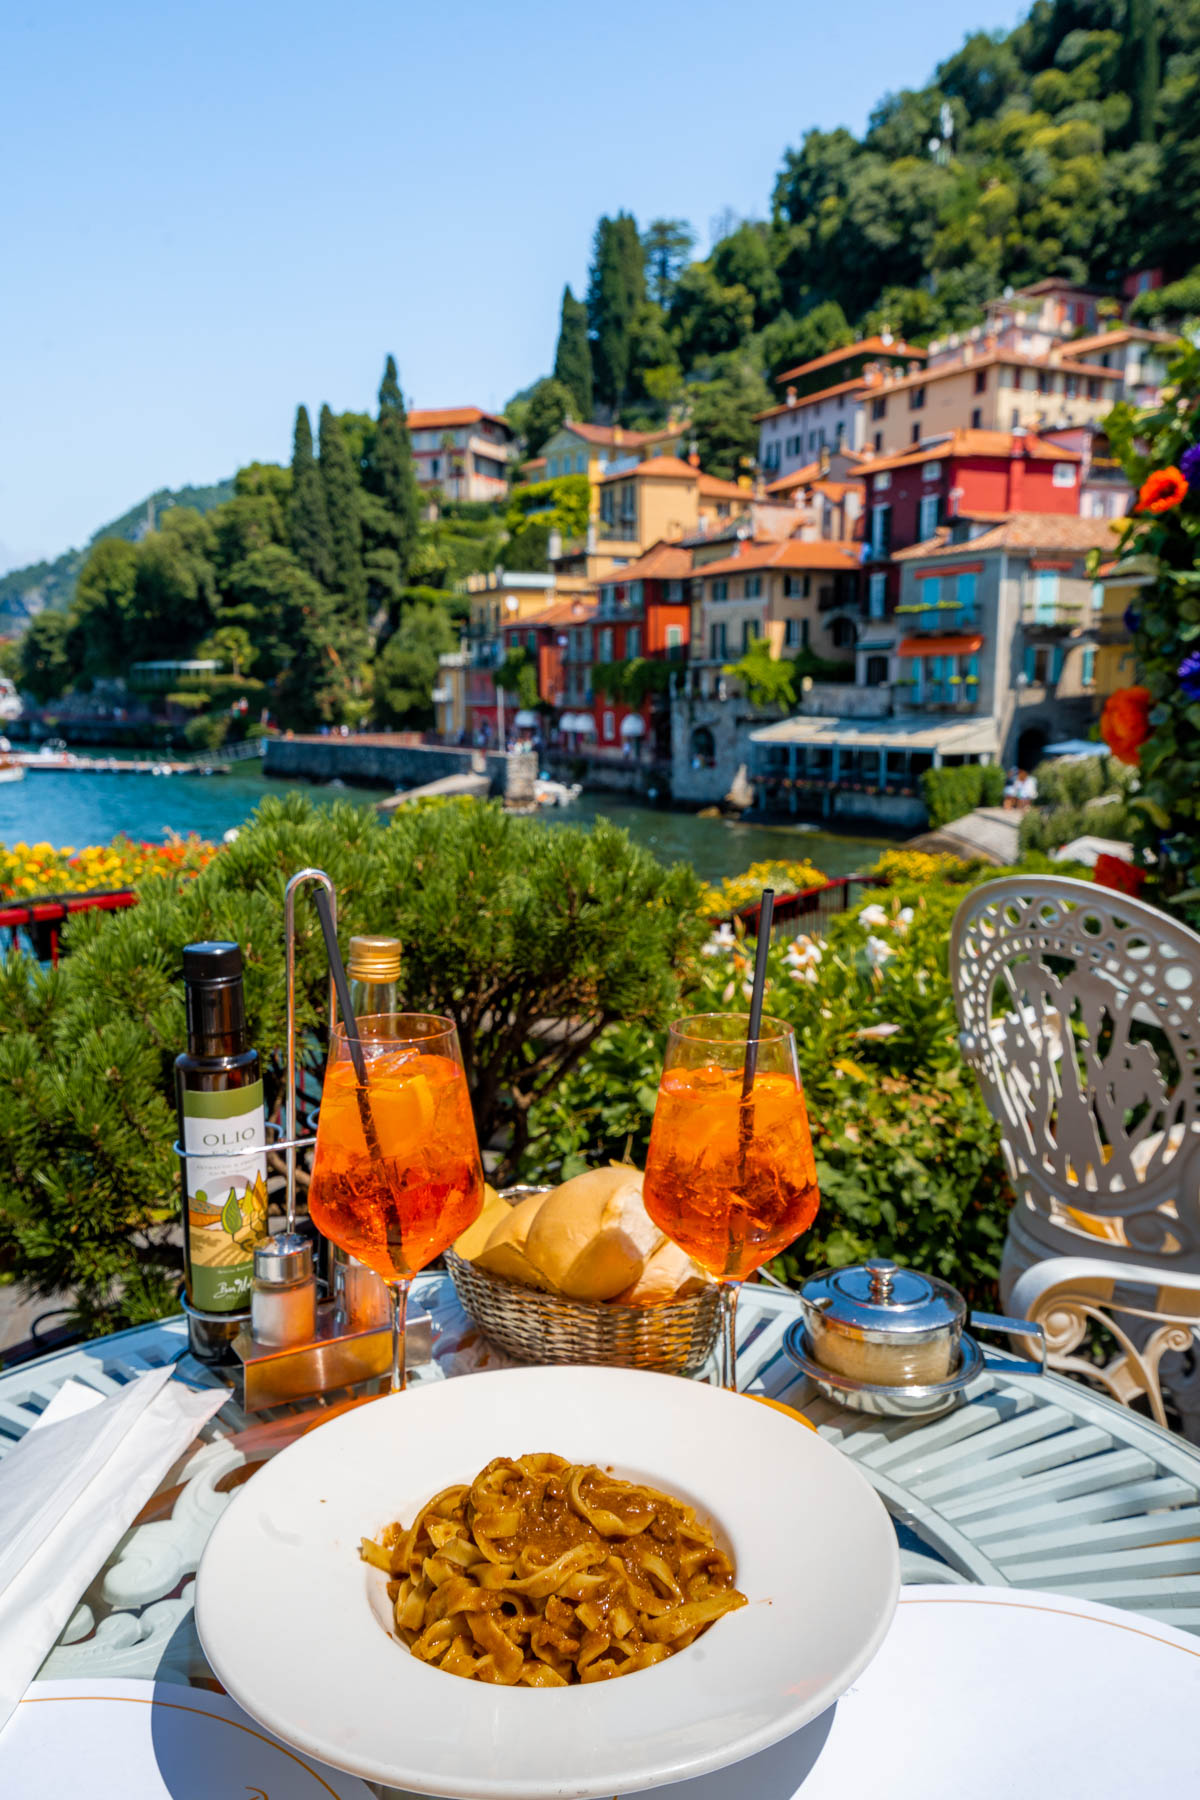 Lunch at Bar Il Molo Varenna, Lake Como